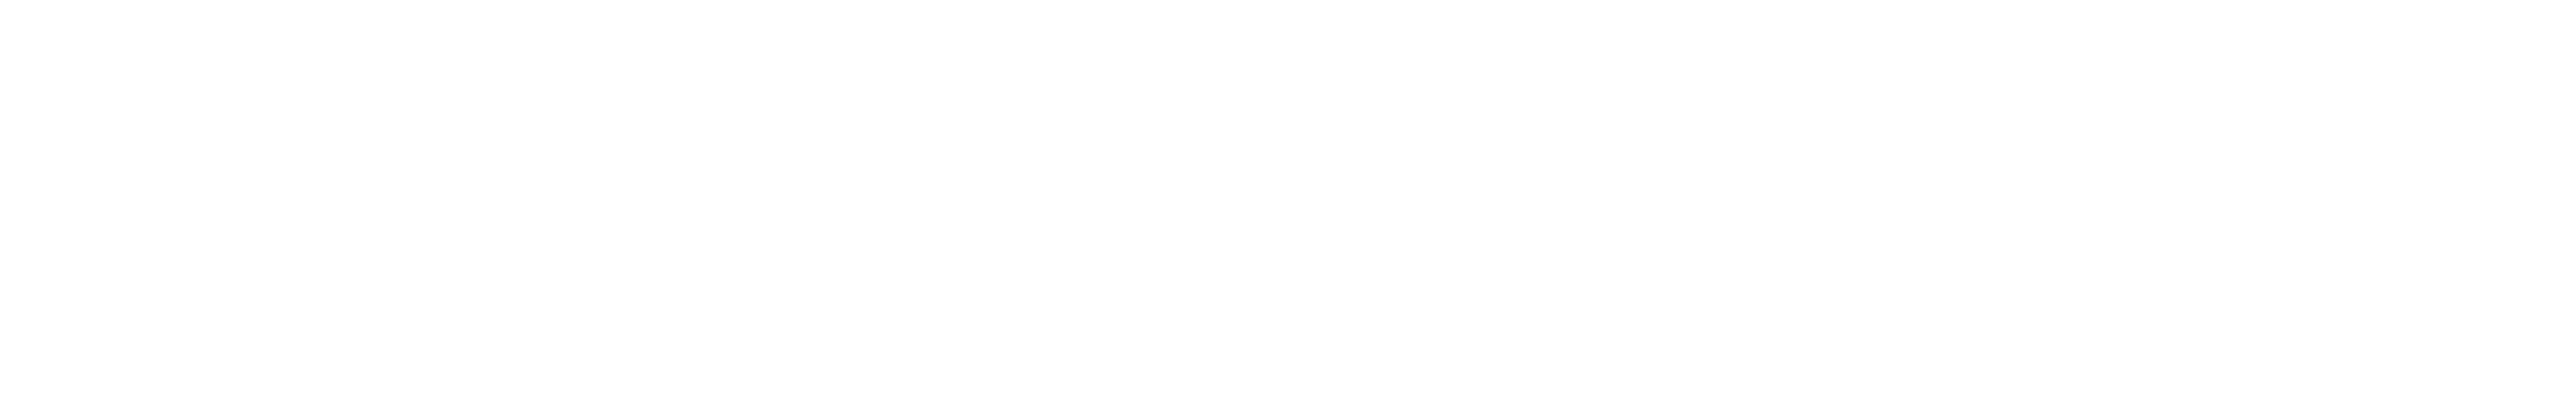 Low Rise Green Building Winner